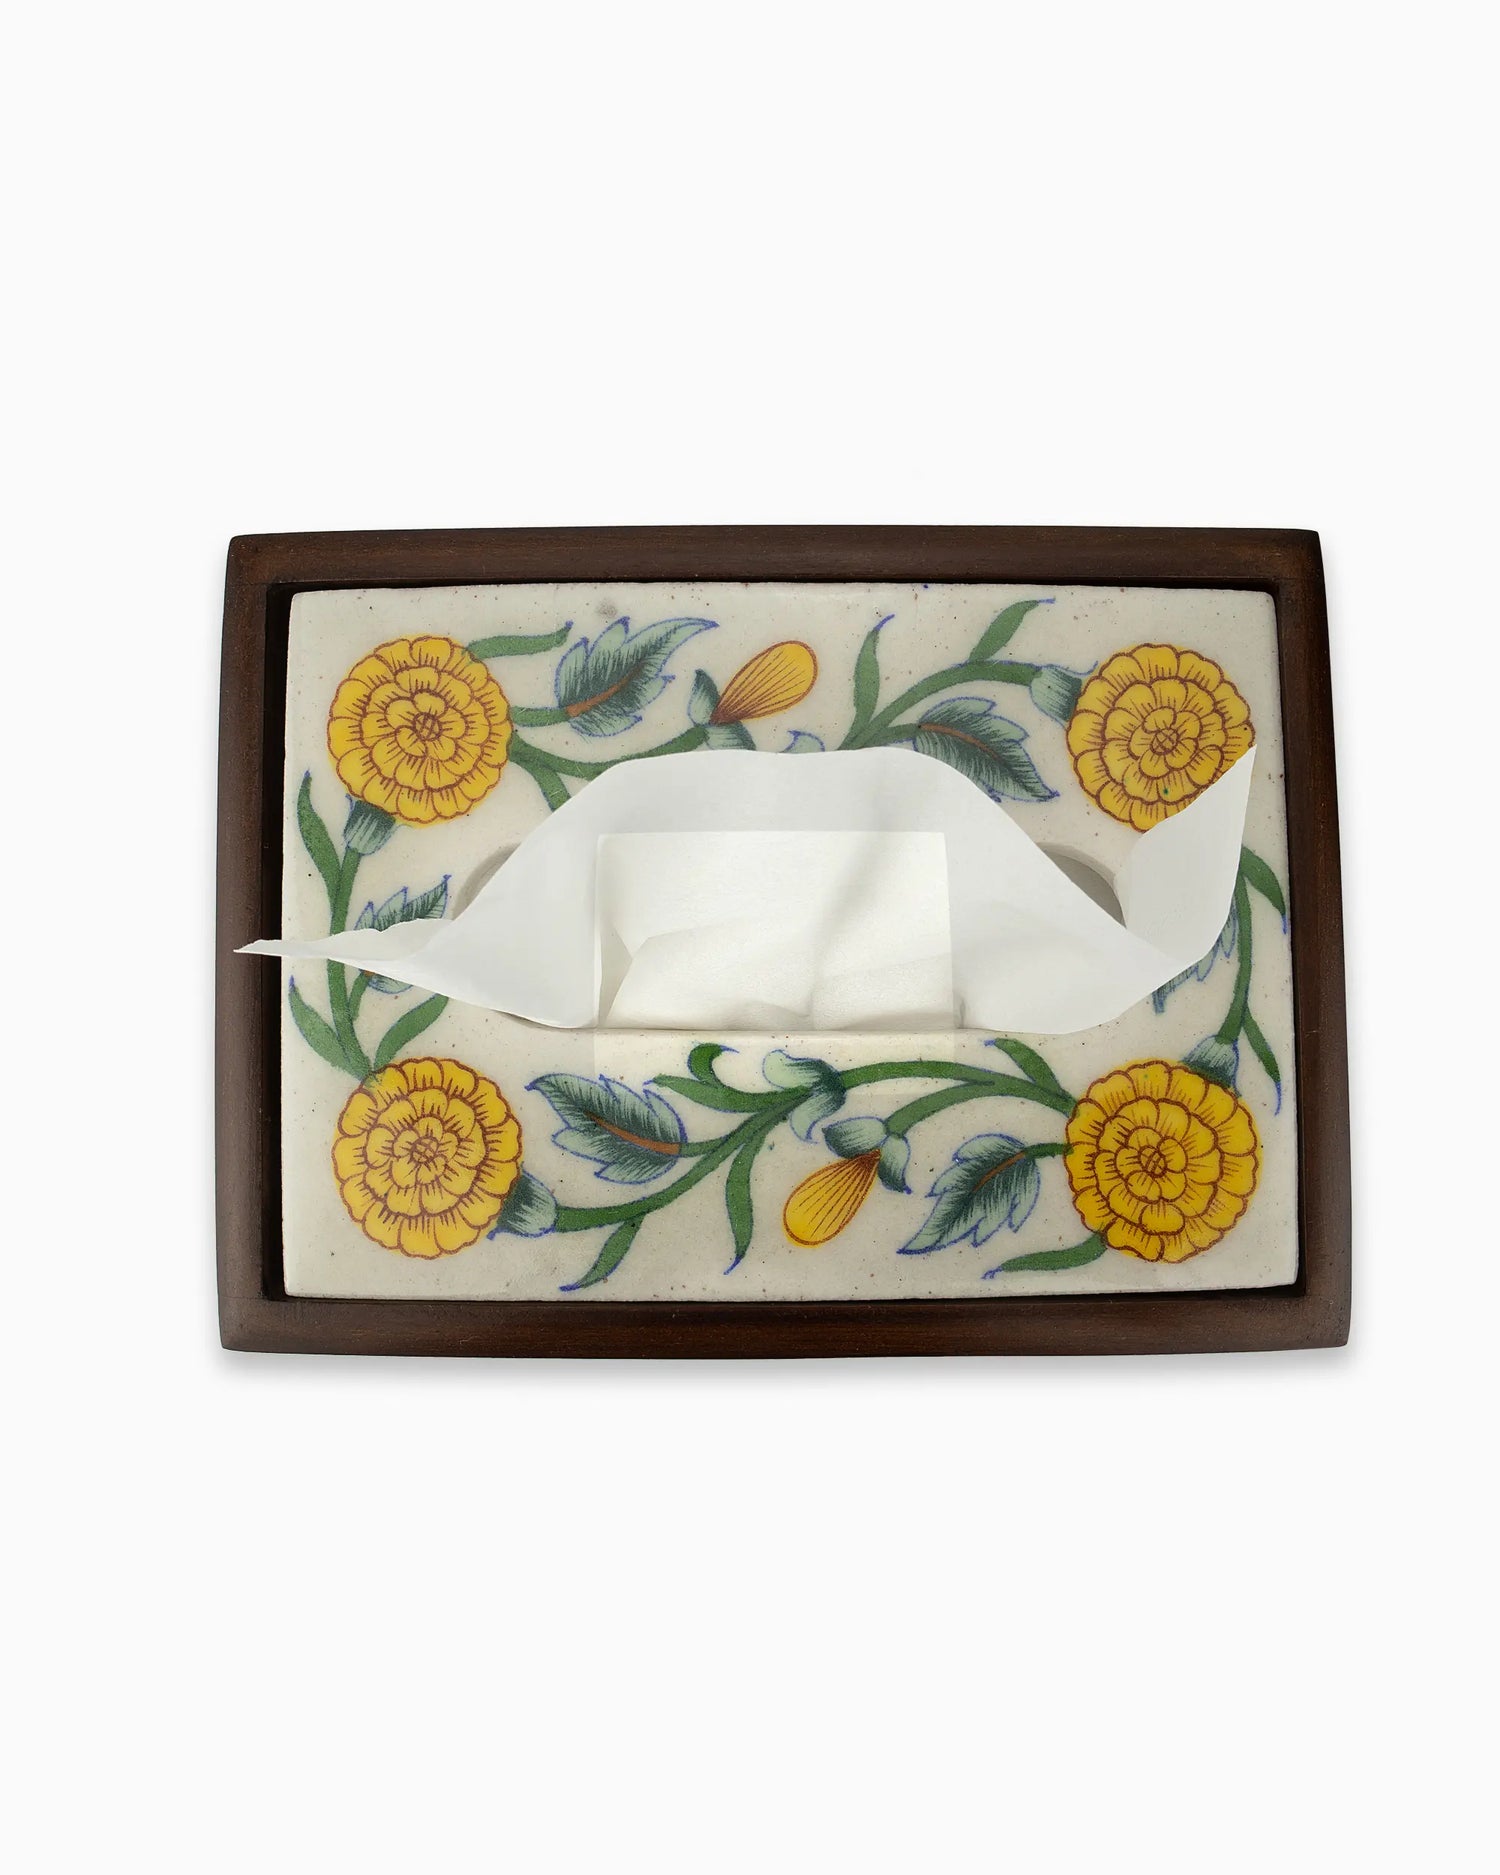 Wooden Tissue Box Holder with Ceramic Tile